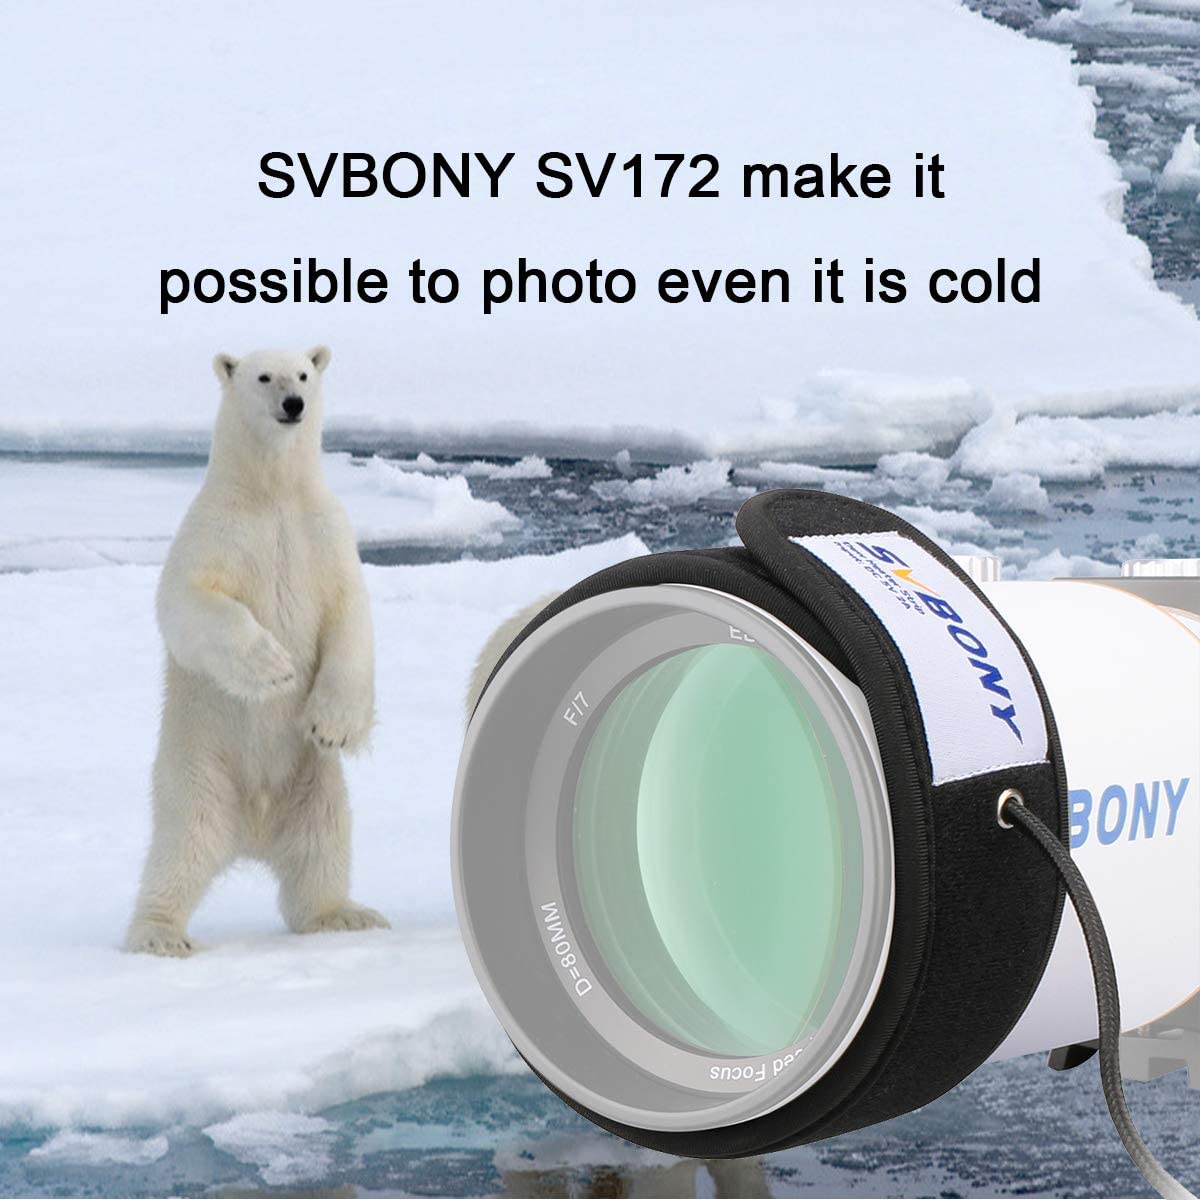 Svbony SV172 Lens Warmer.